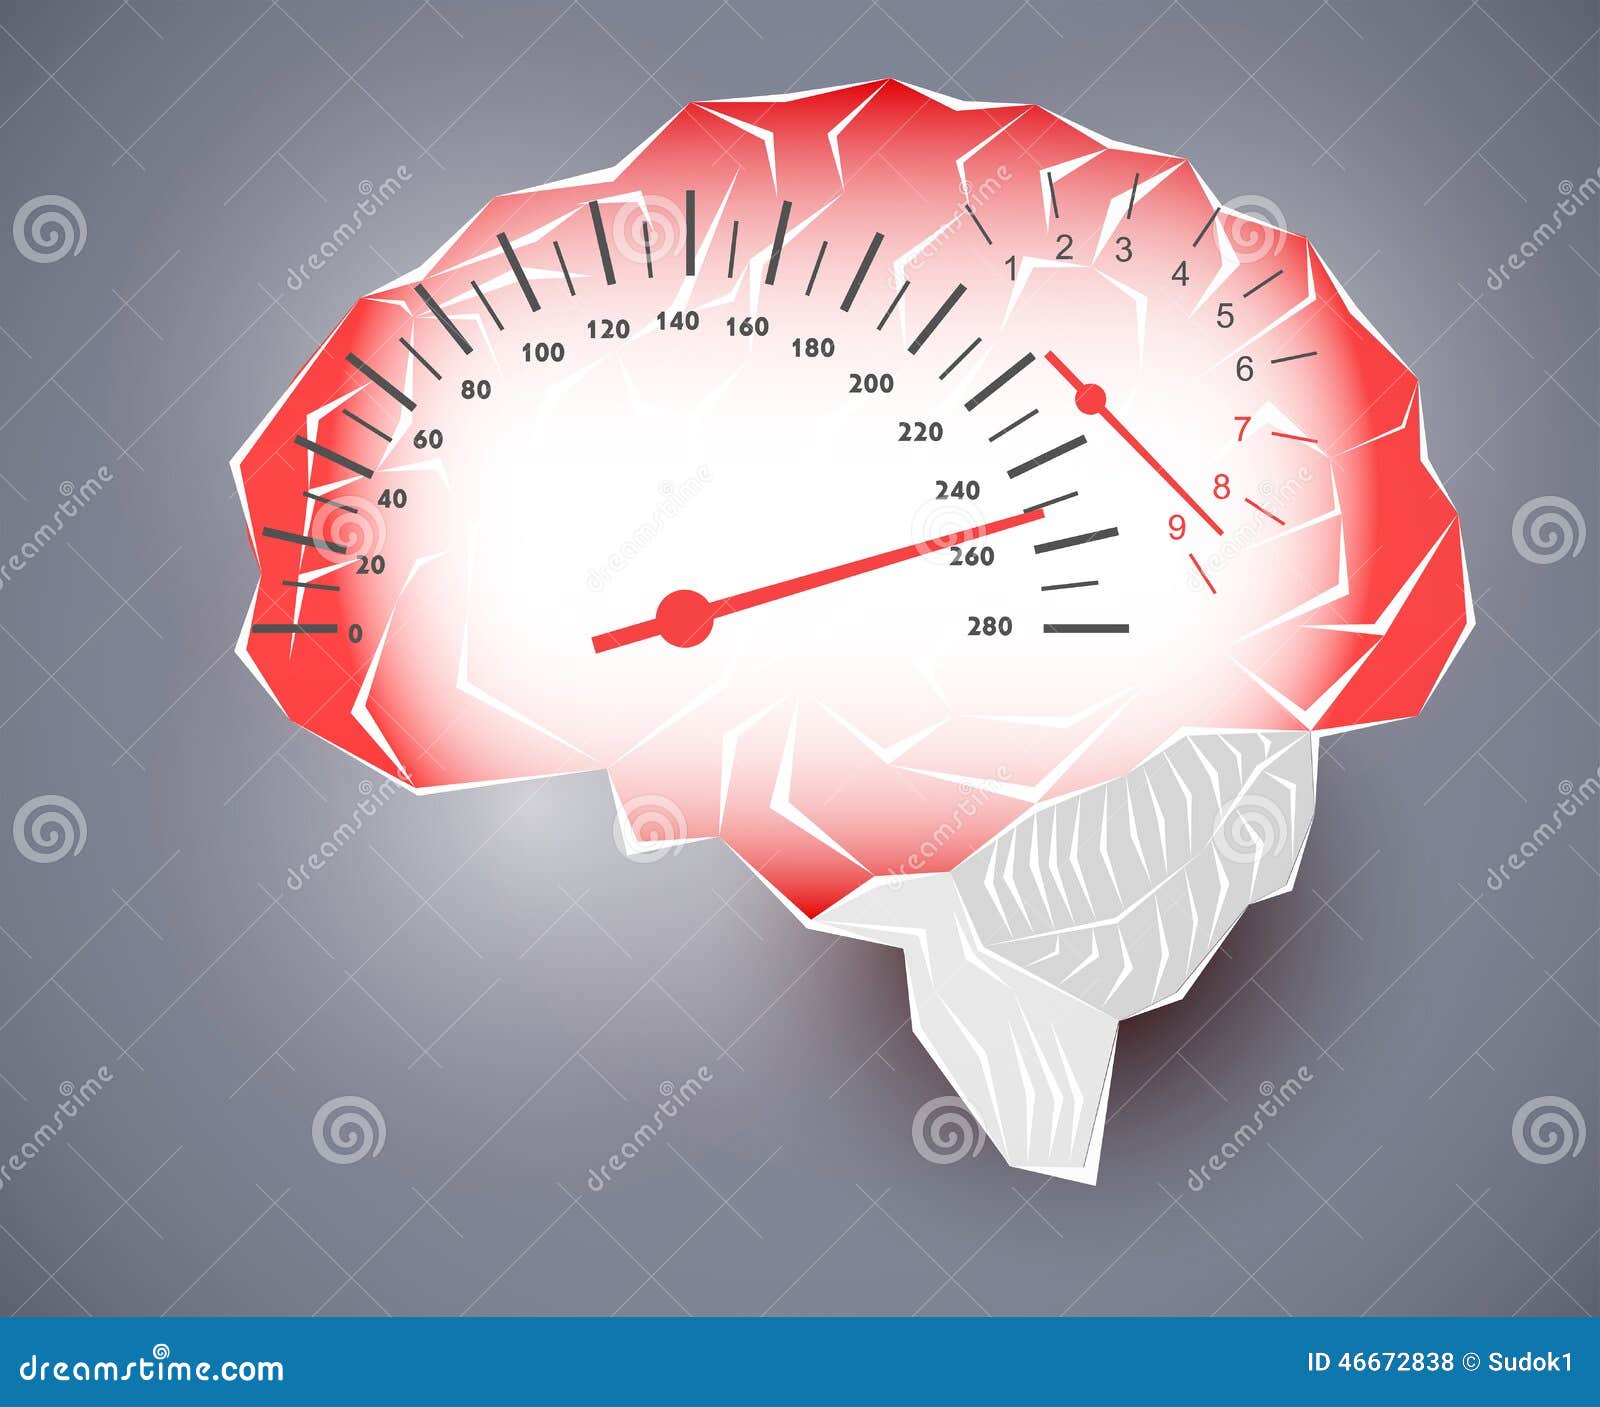 Qual a velocidade do cérebro humano?